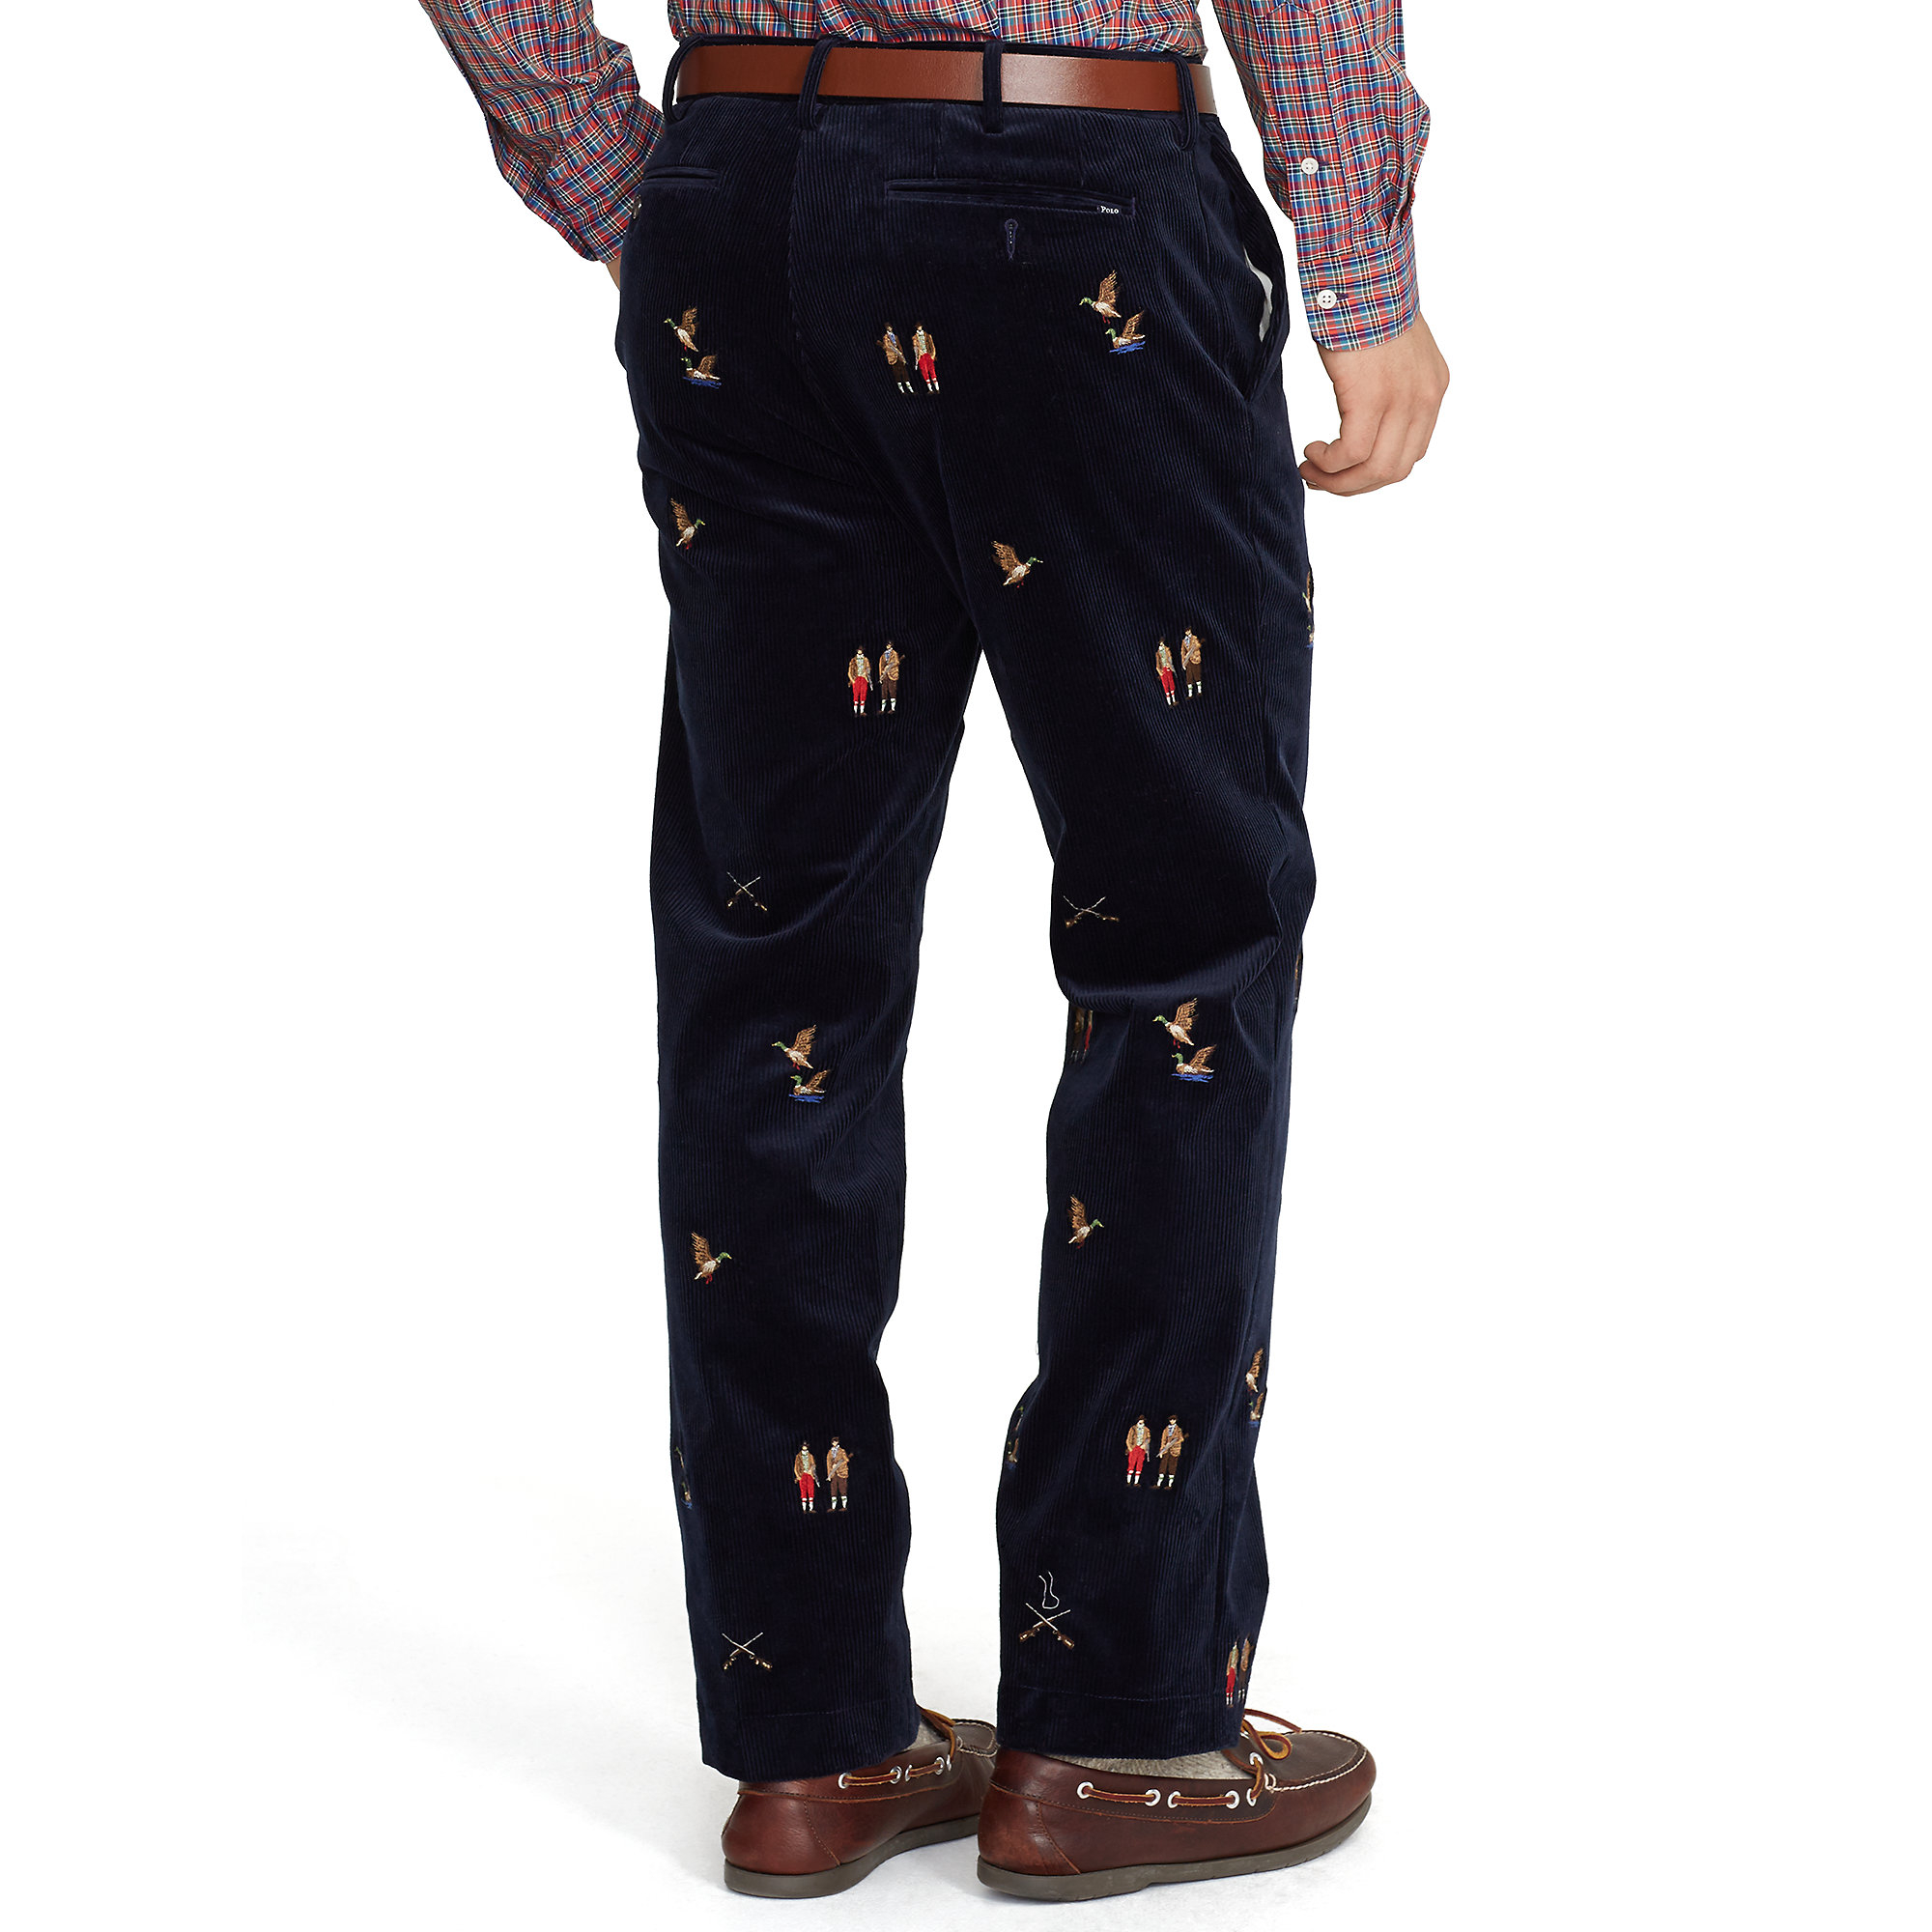 polo embroidered pants